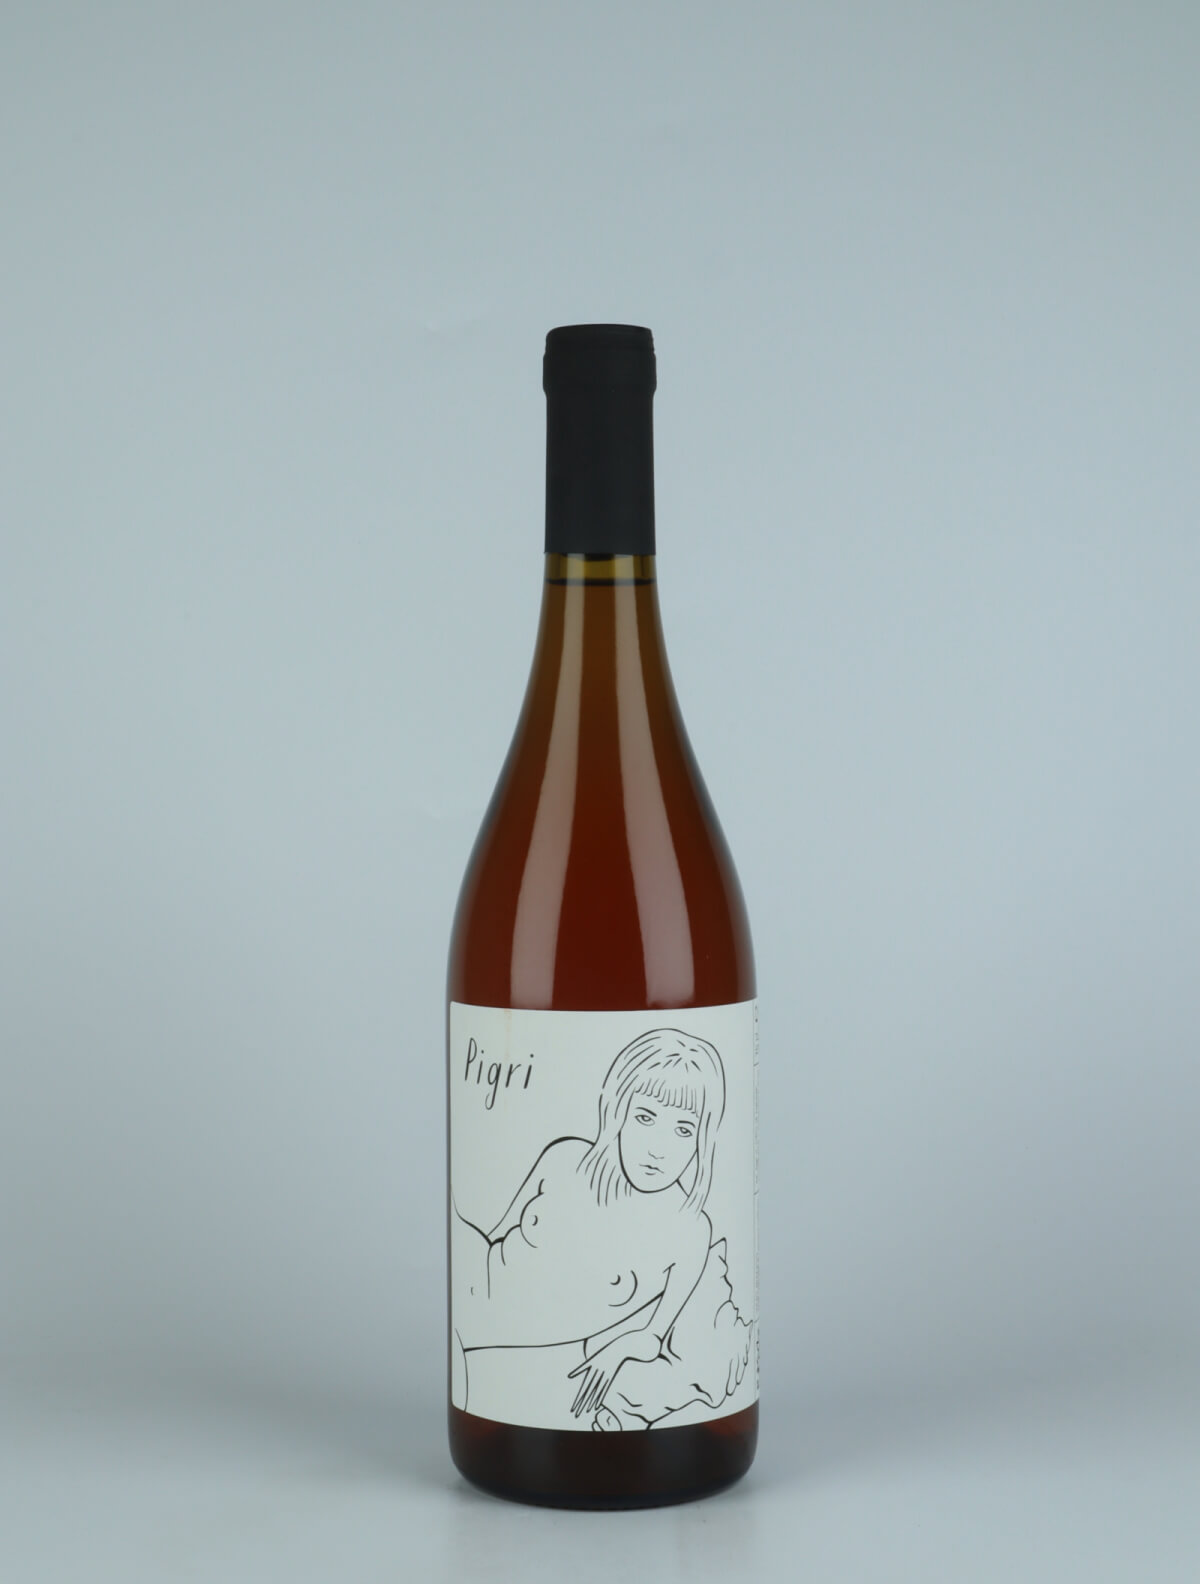 A bottle 2021 Pigri White wine from Il Ceo, Veneto in Italy